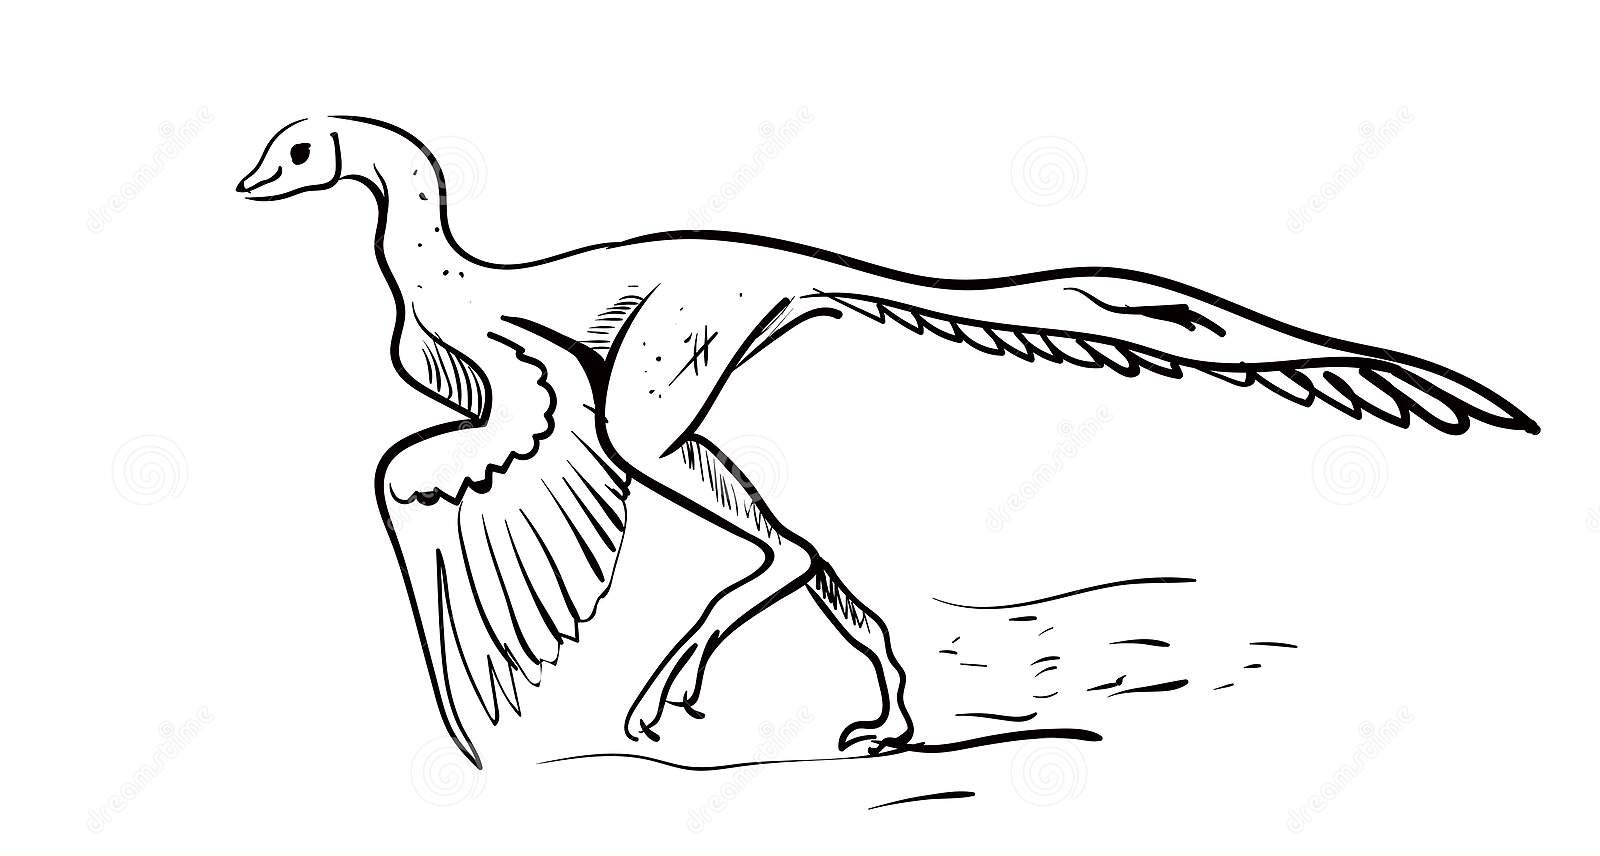 Archaeopteryx illustrateur vecteur fond blanc d'Archeopteryx